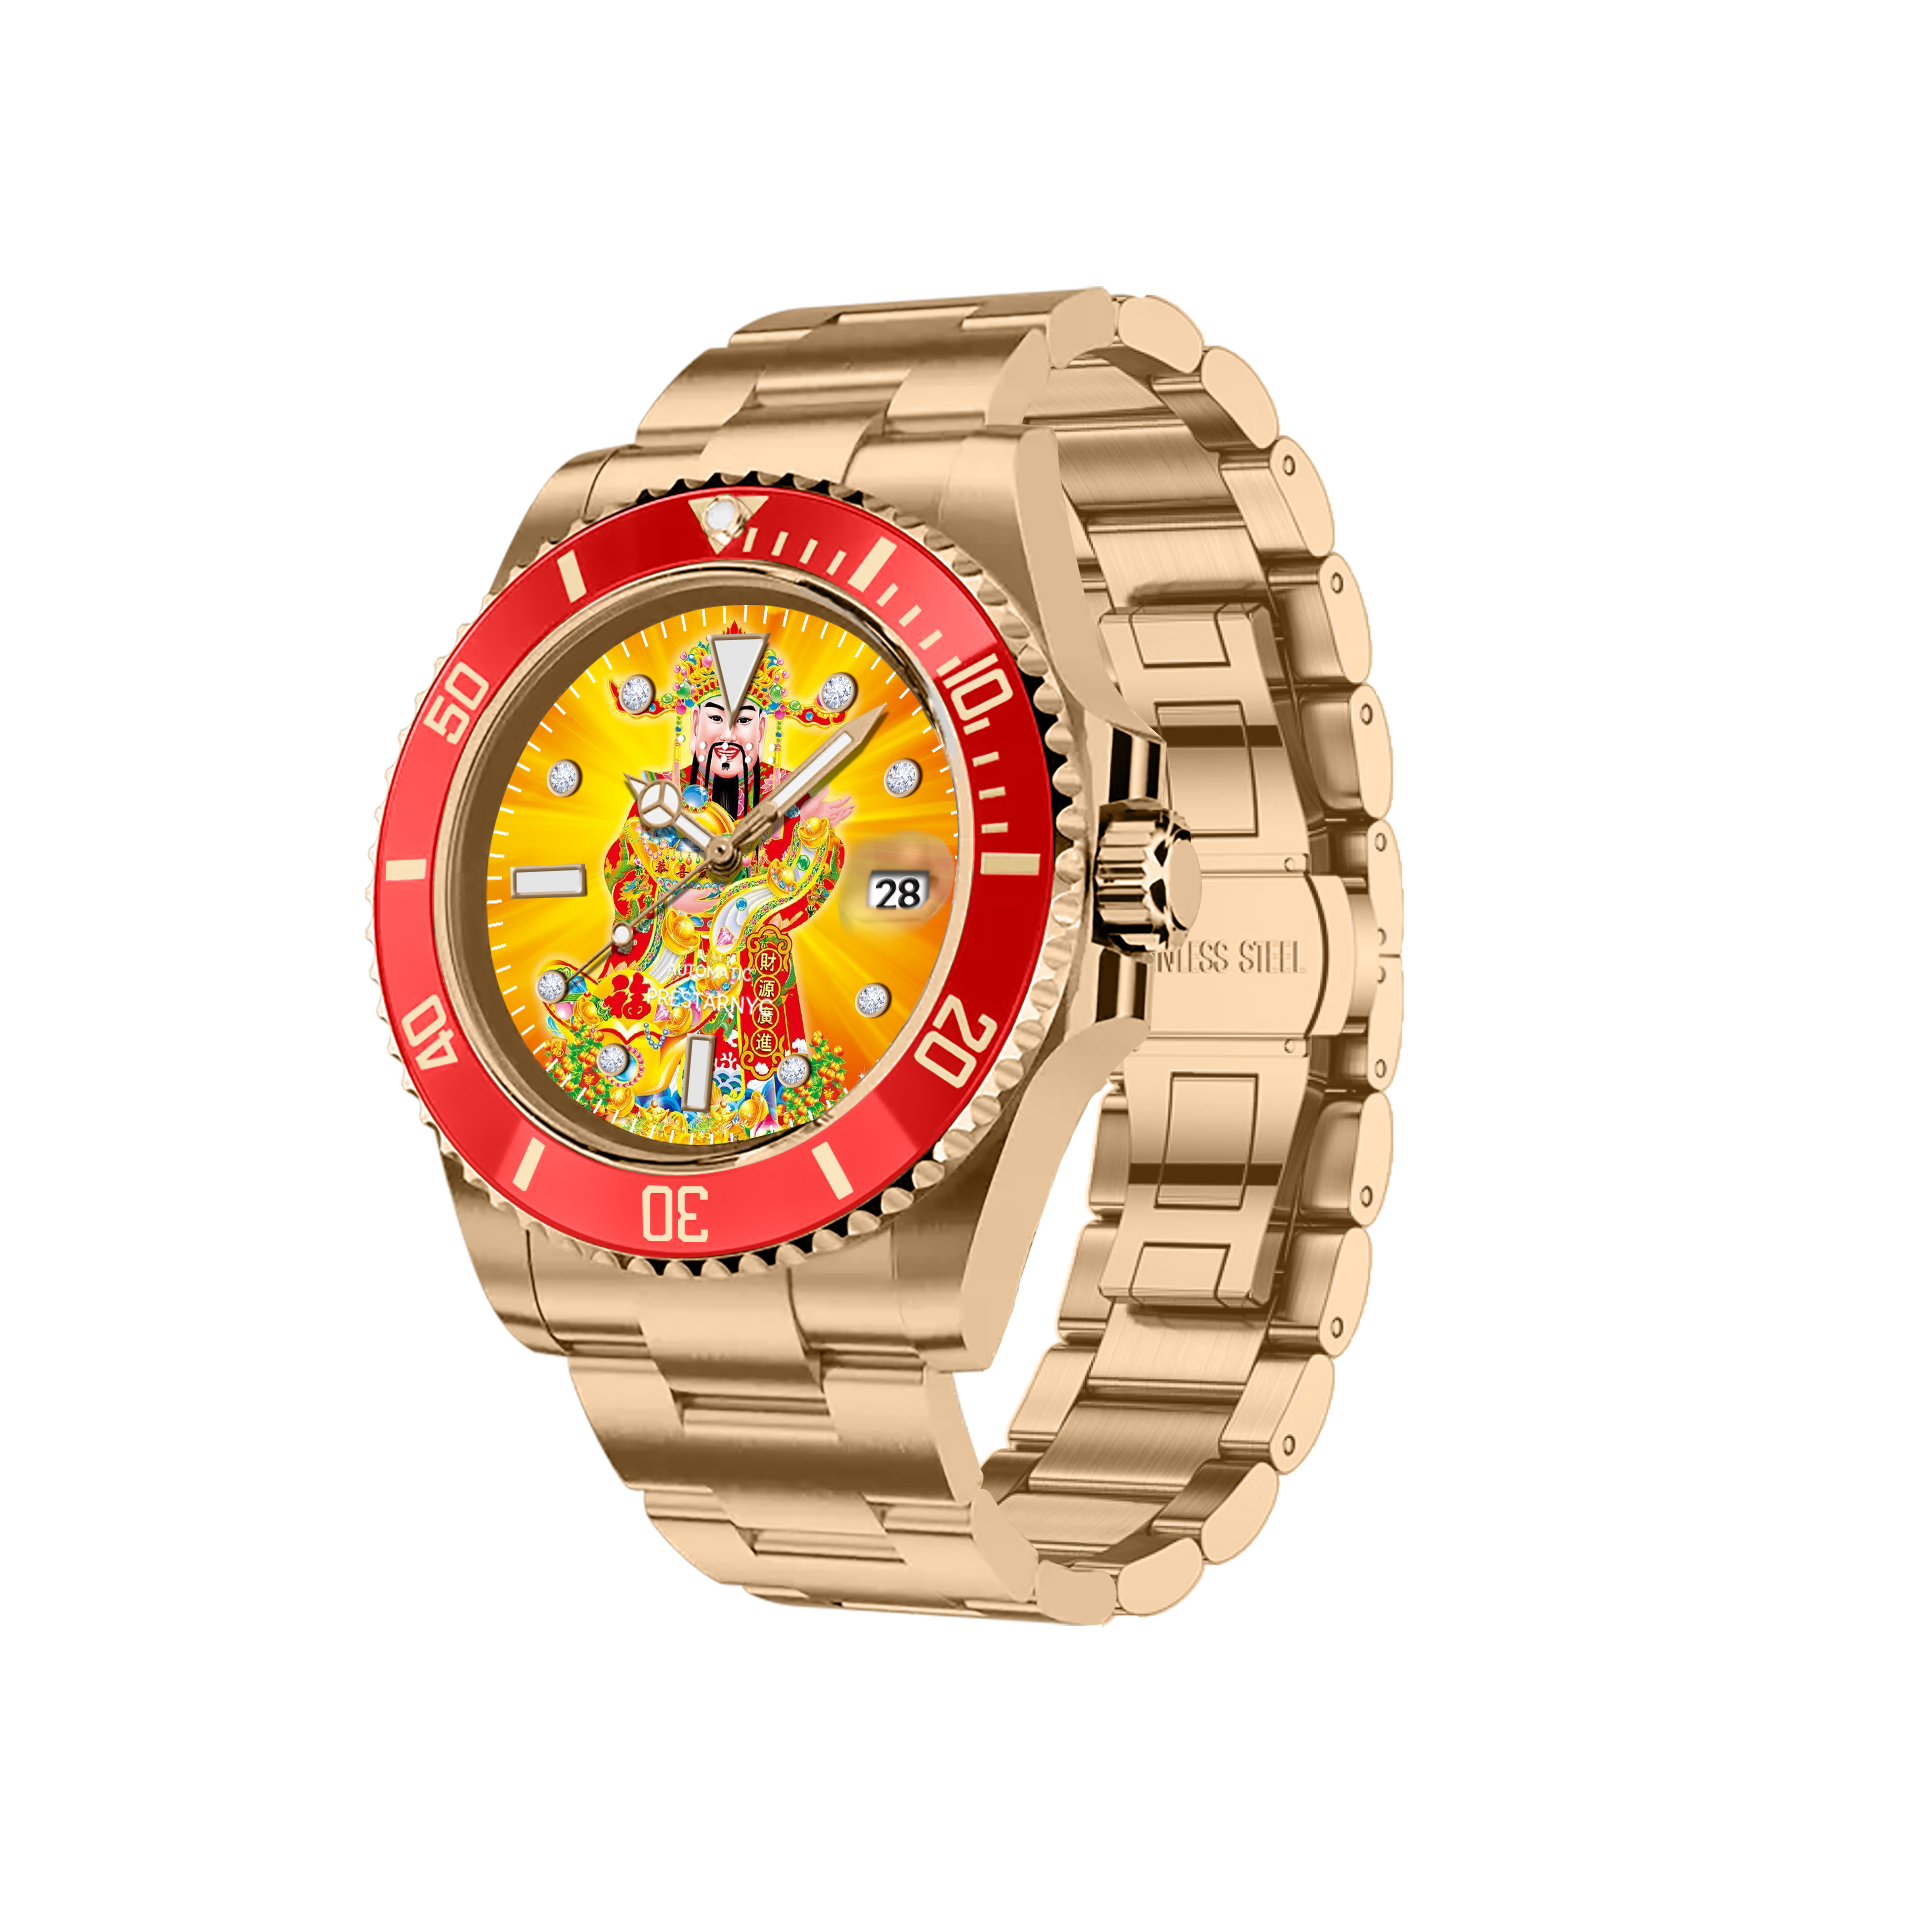 Prestar NYC Aquaman Initial Mechanical Watch (Golden God of Wealth)